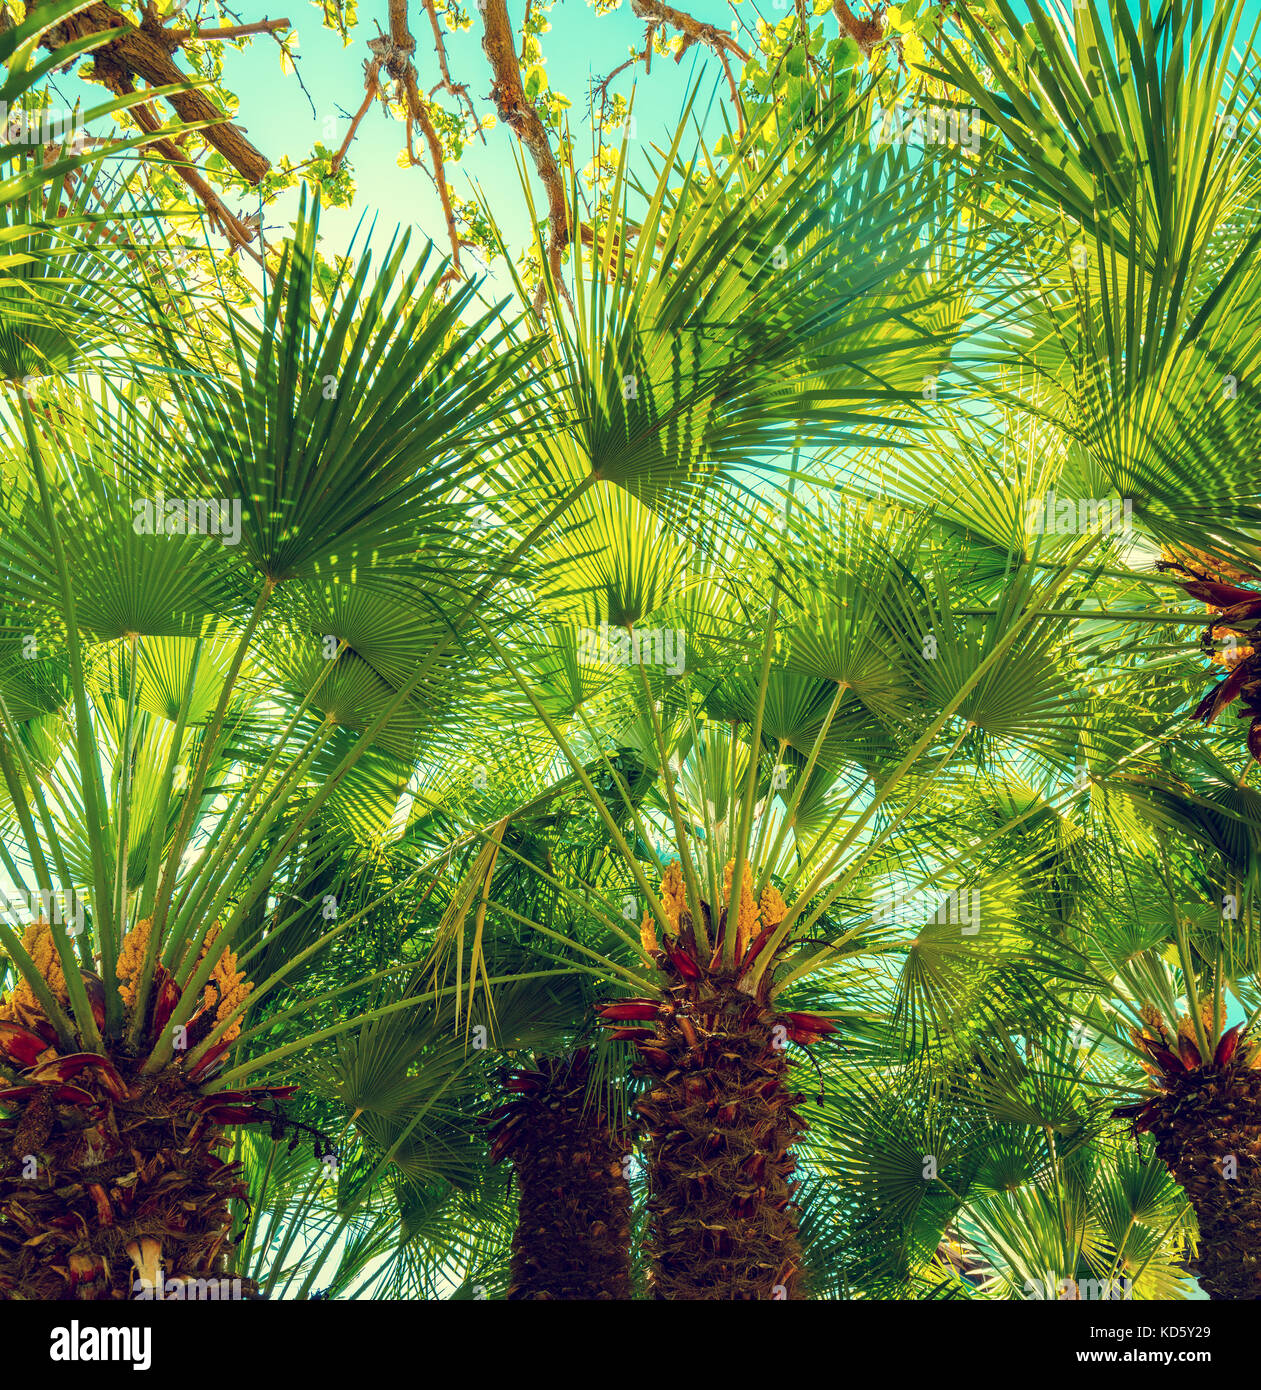 The row of Chamaerops humilis palm trees. Tropical landscape. Stock Photo